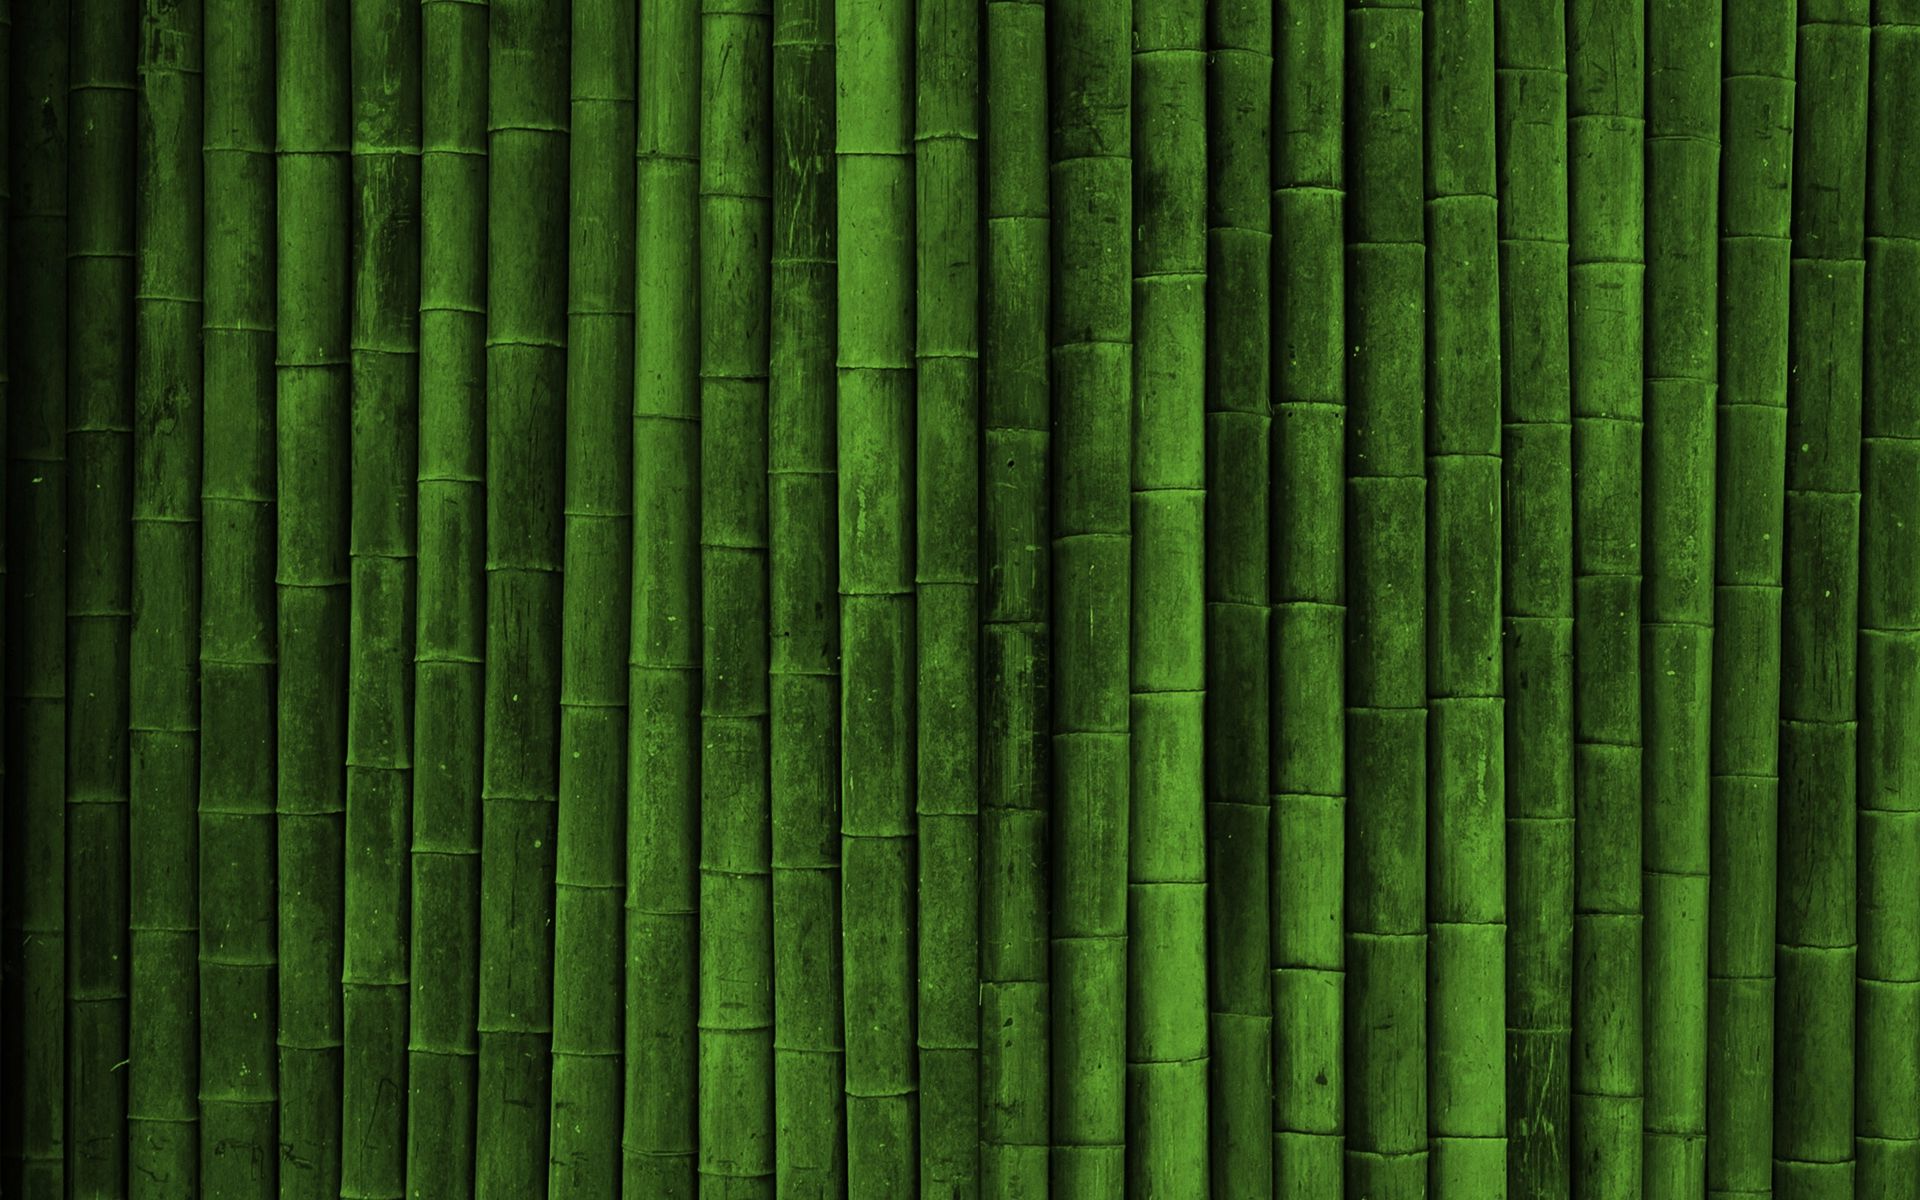 Bamboo Background Image - WallpaperSafari